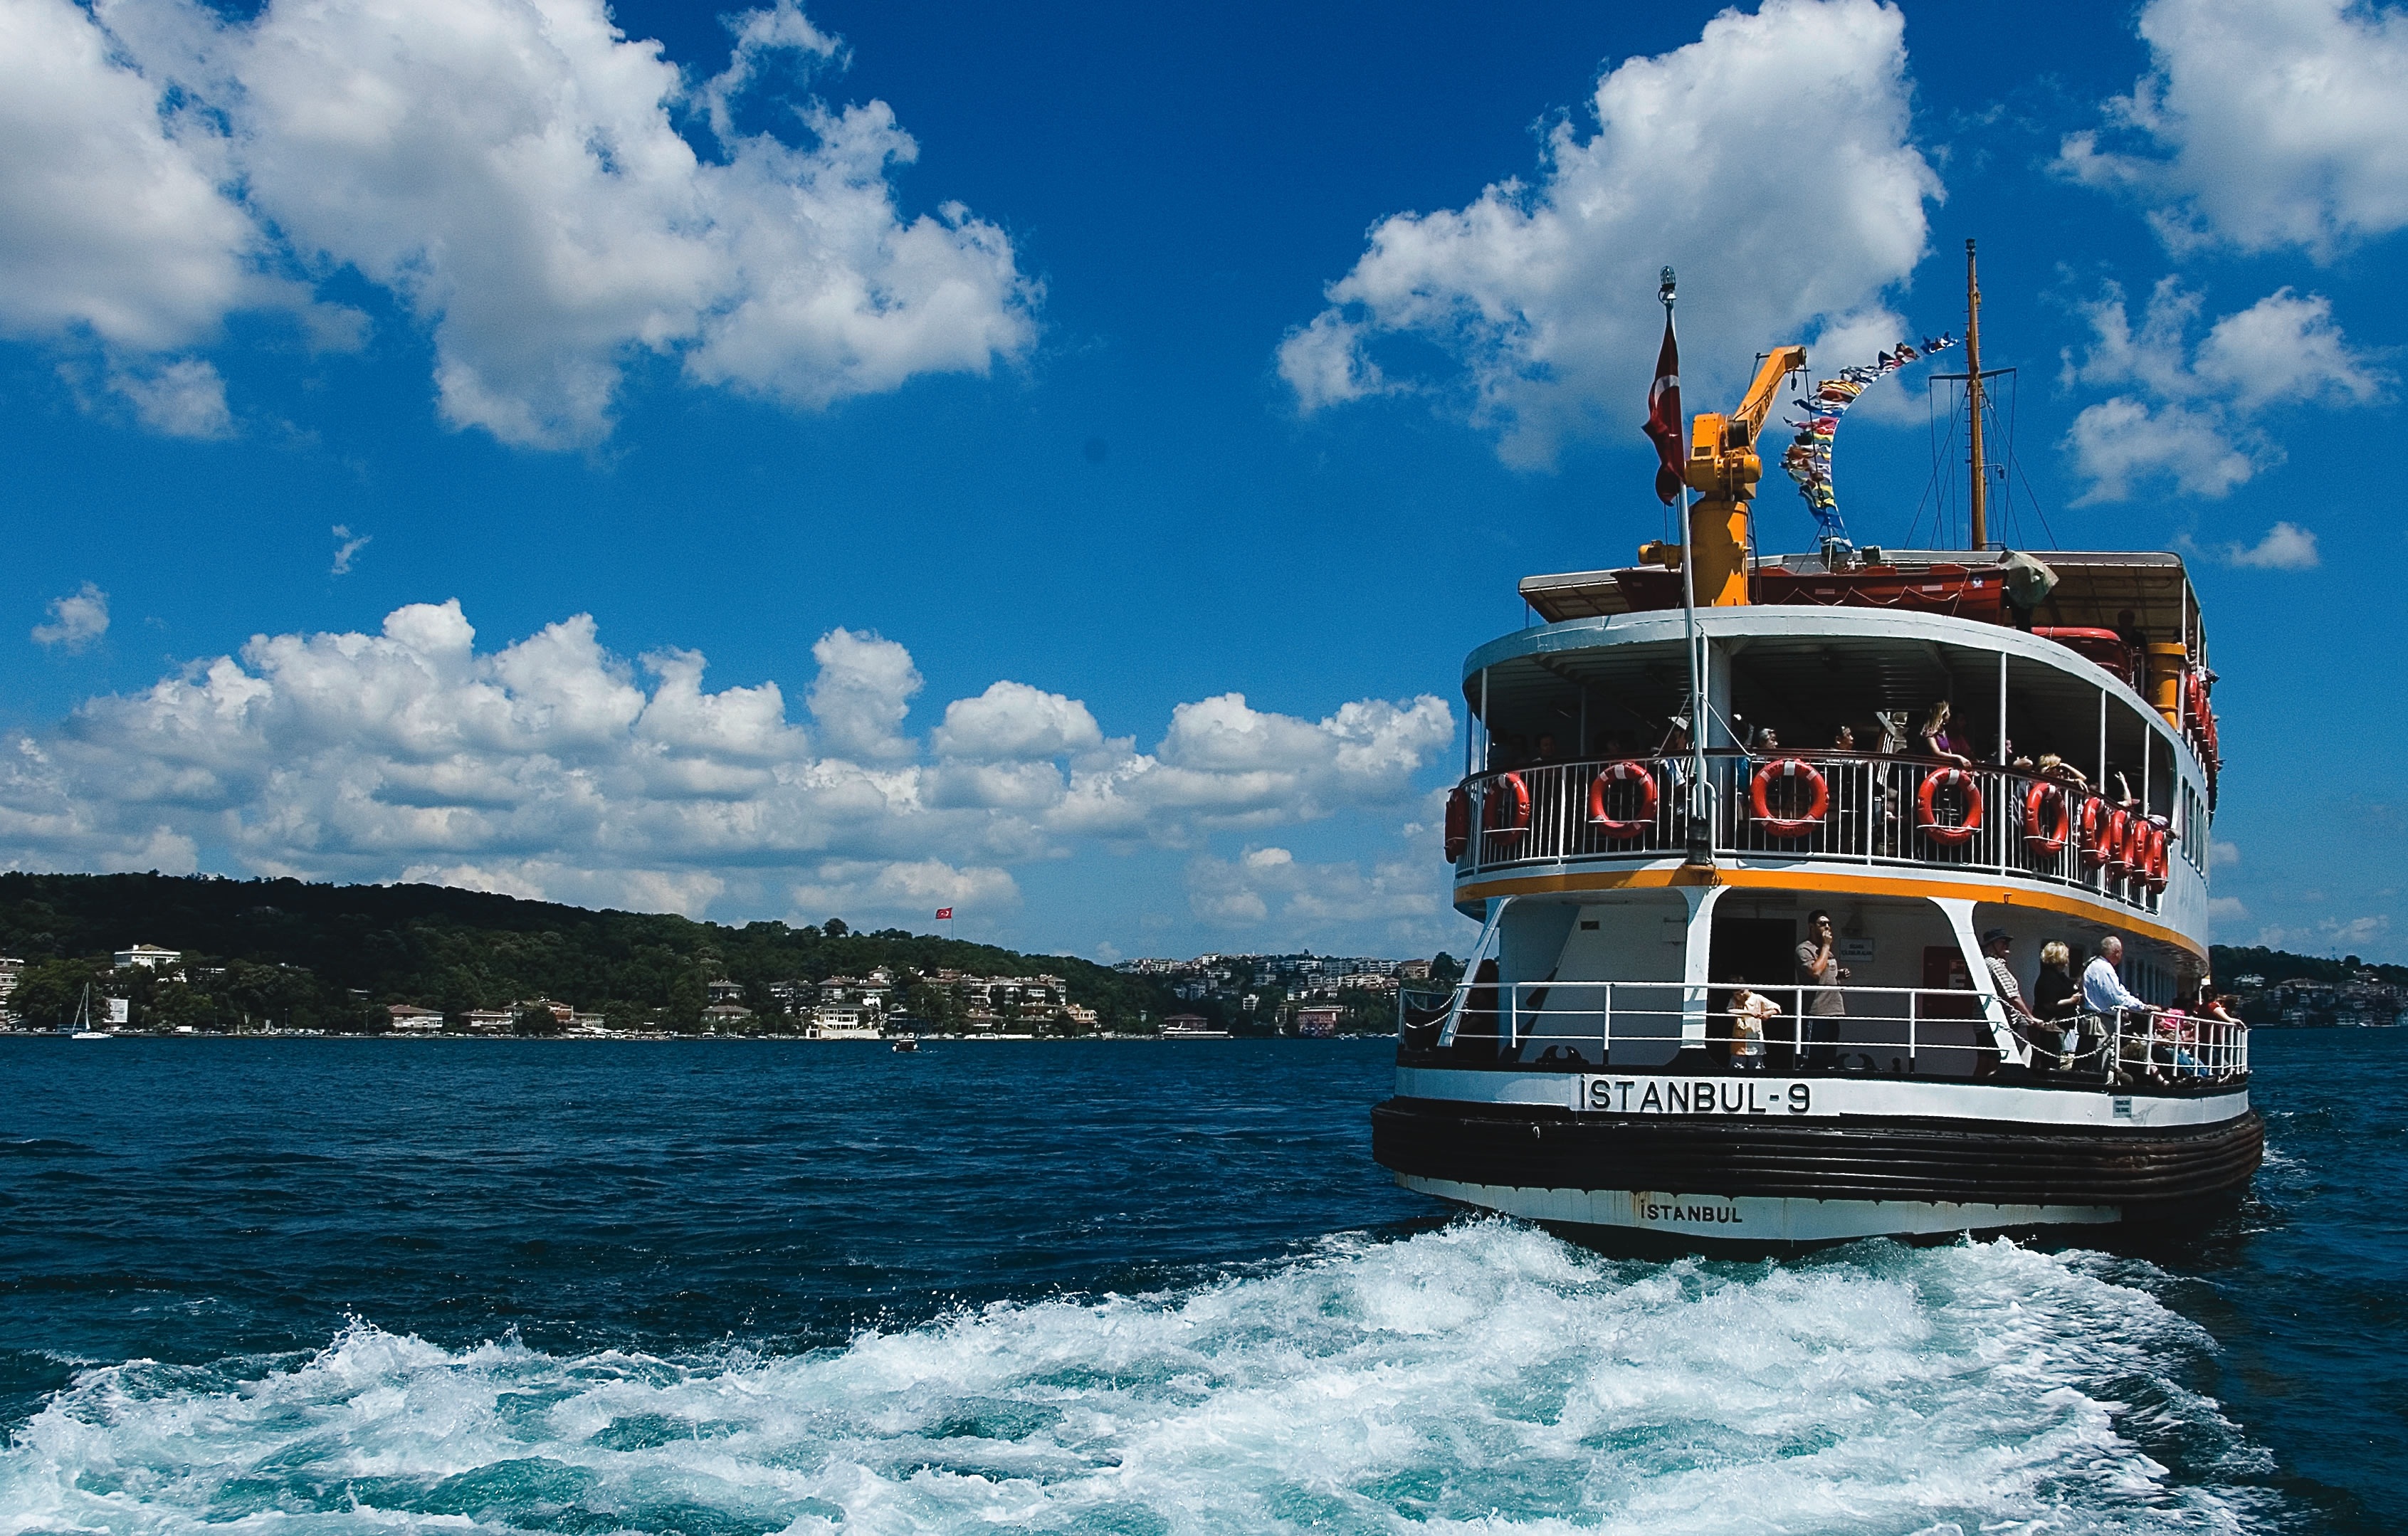 Princess islands. Adalar Стамбул. Ada Boat Tour Турция. Принцессы острова Стамбул. Остров Адалар.